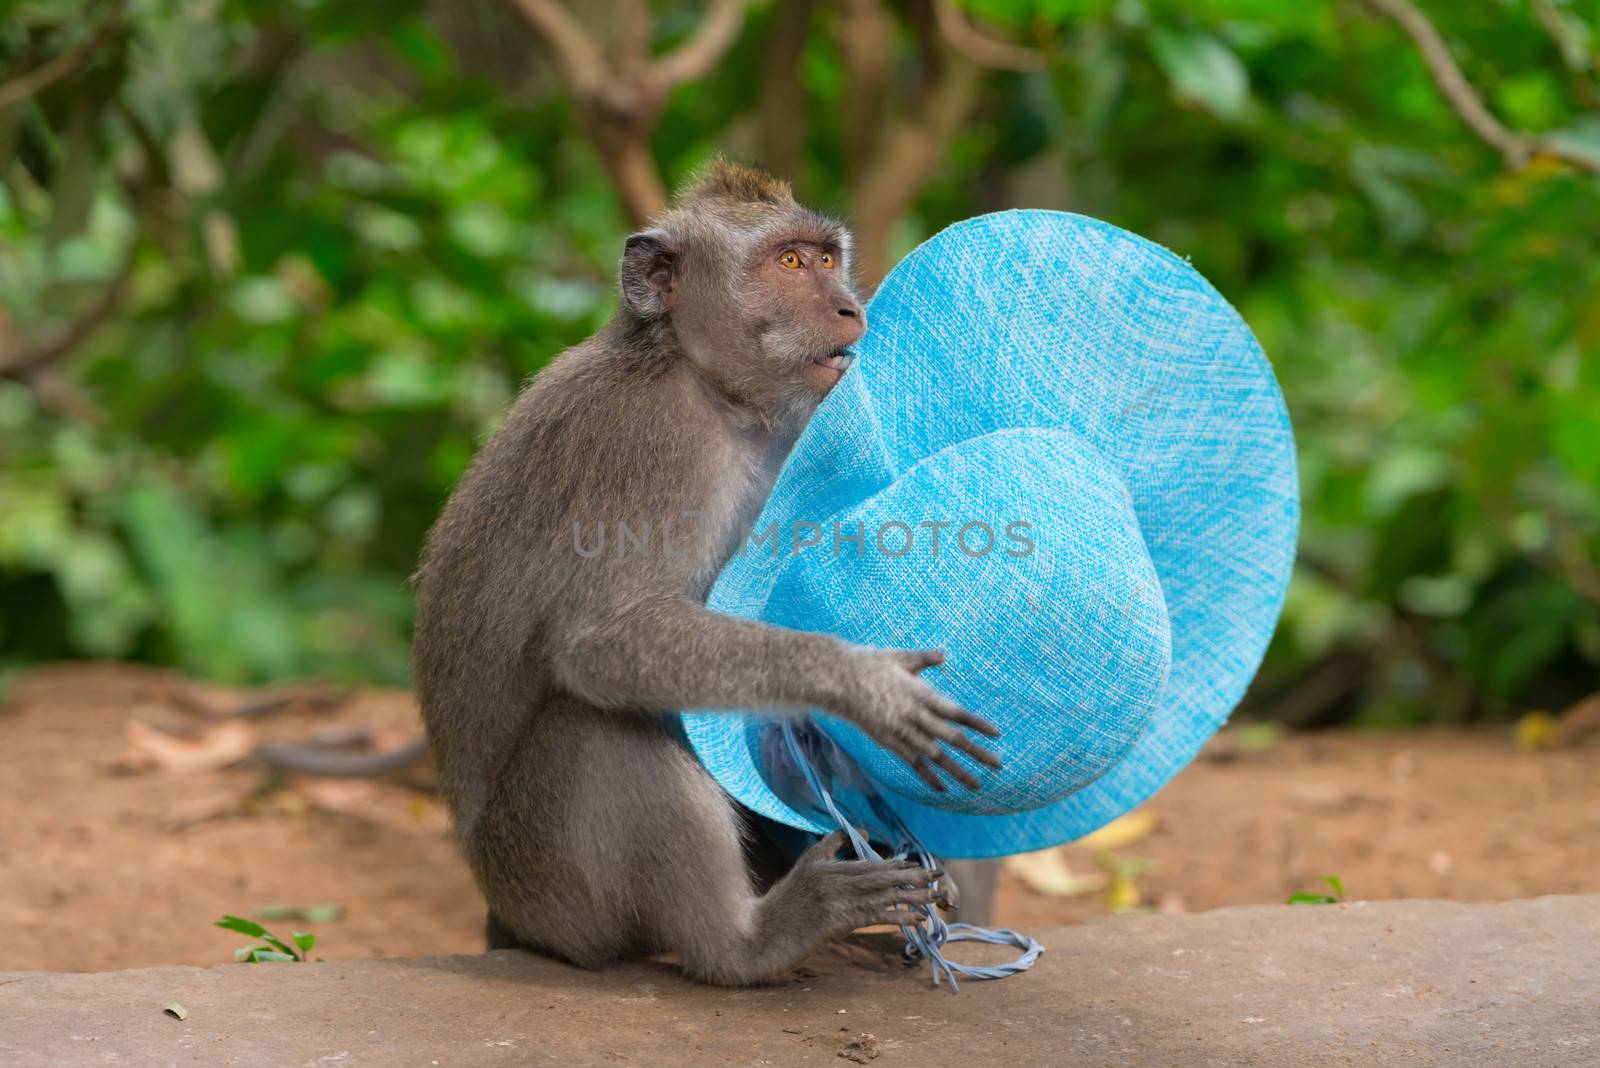 Sly monkey with stolen hat by iryna_rasko